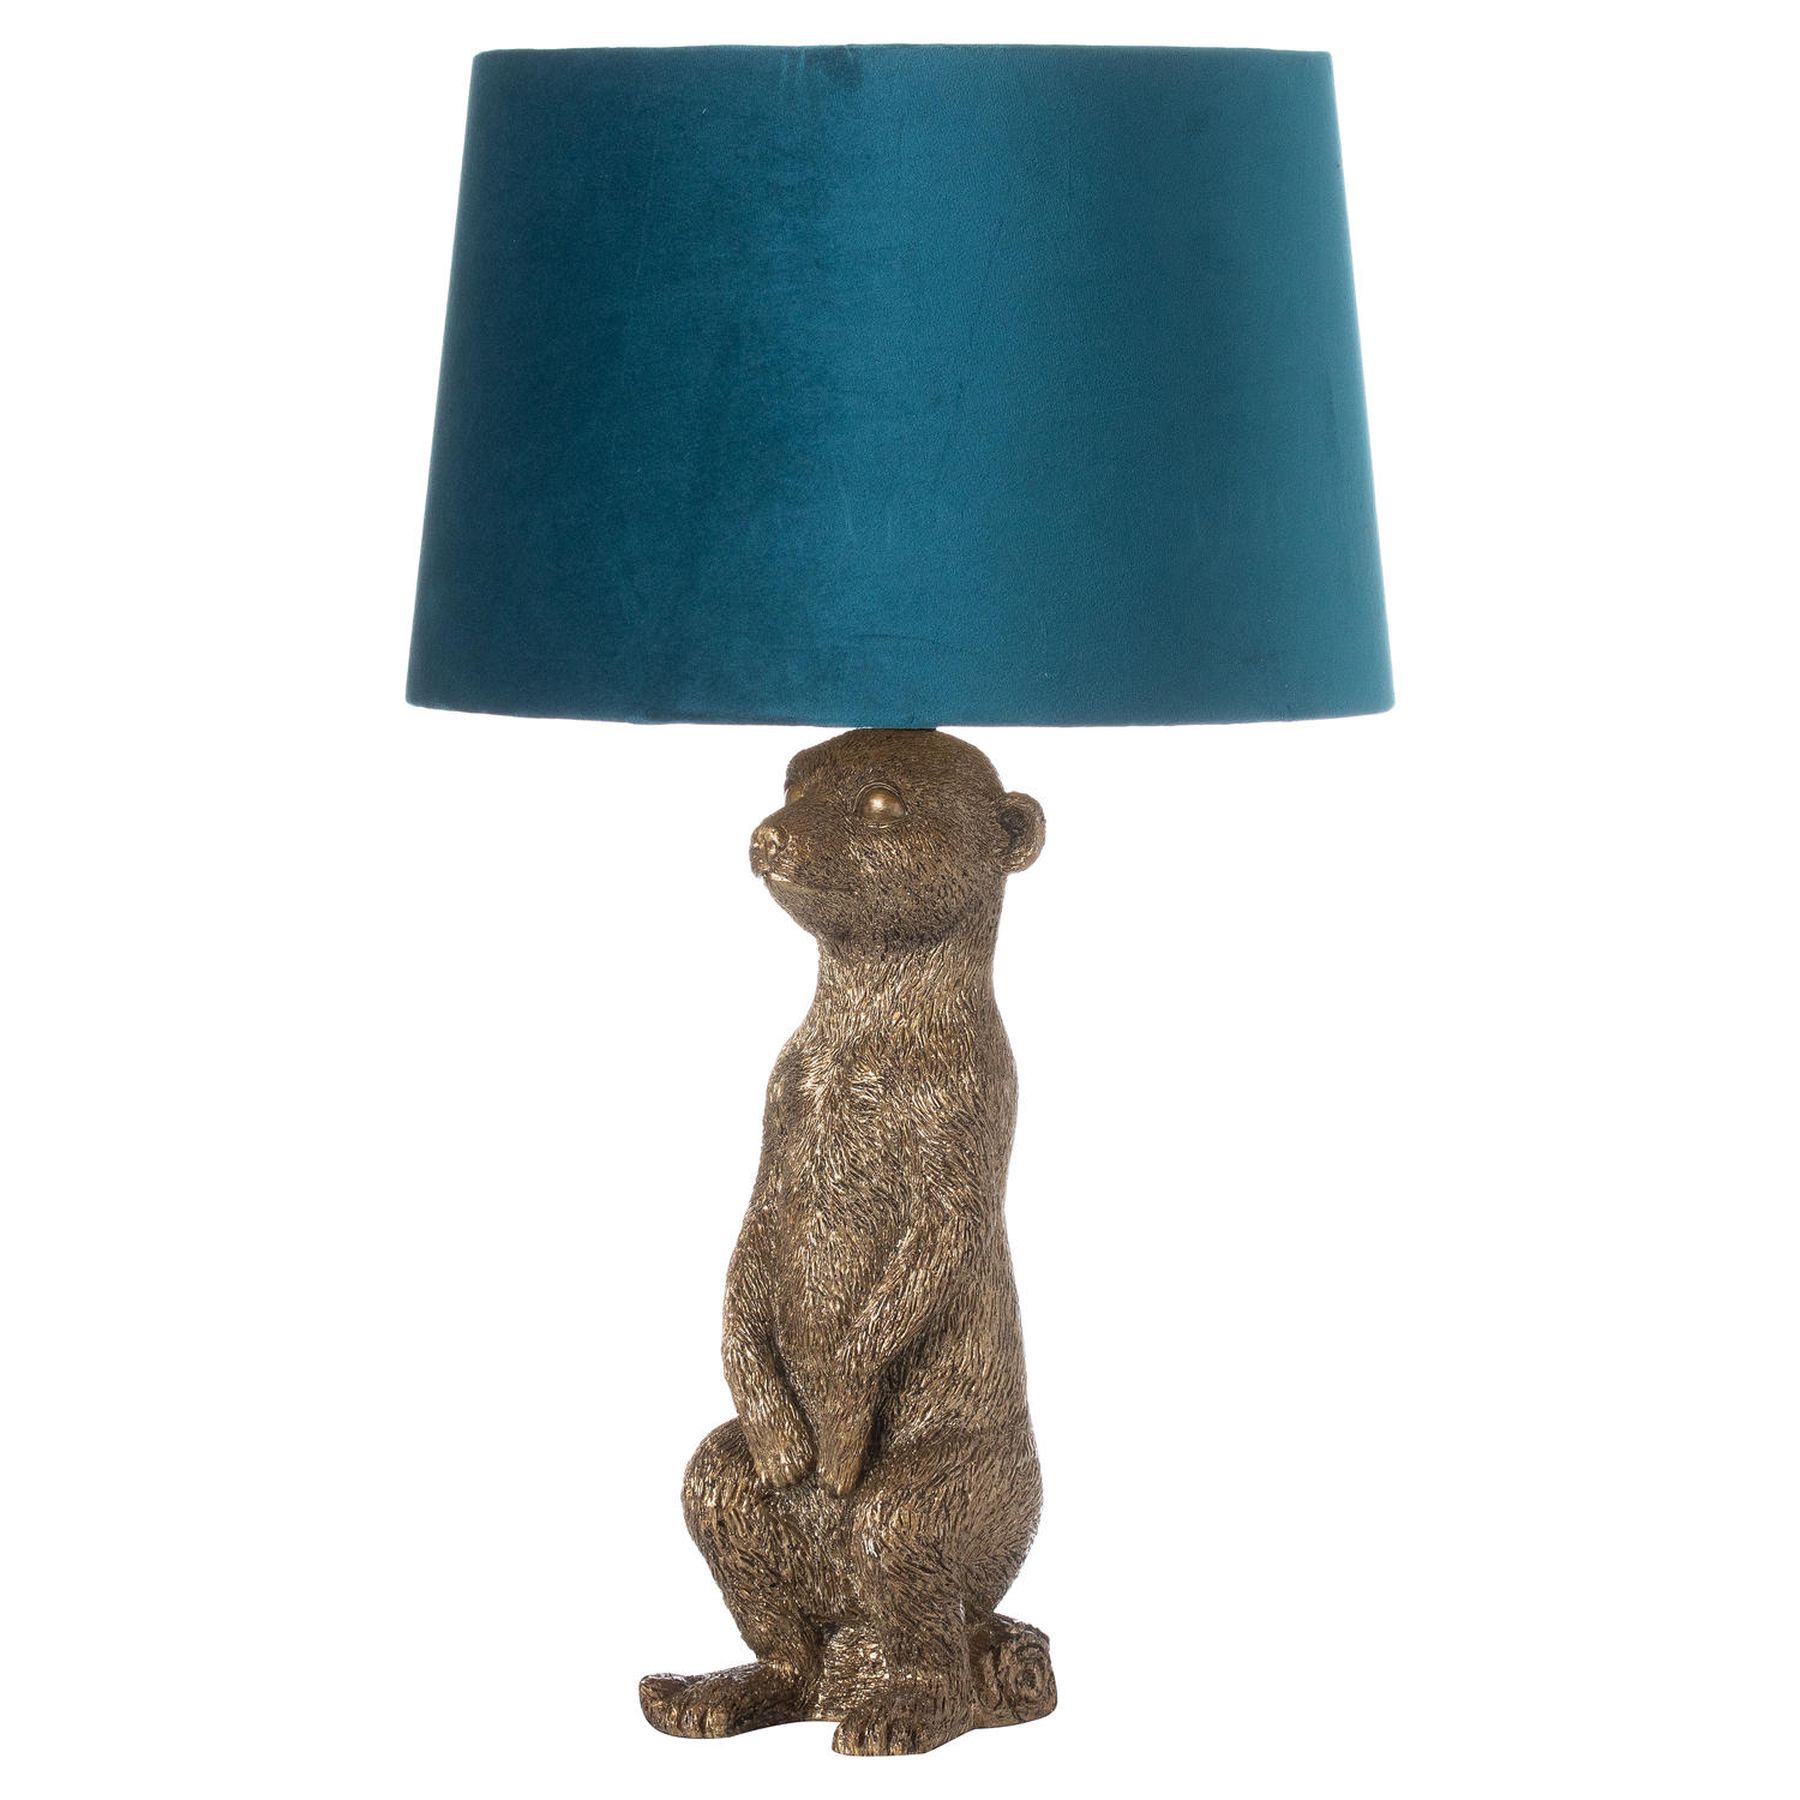 Morris The Meerkat Table Lamp With Teal Velvet Shade - Image 1